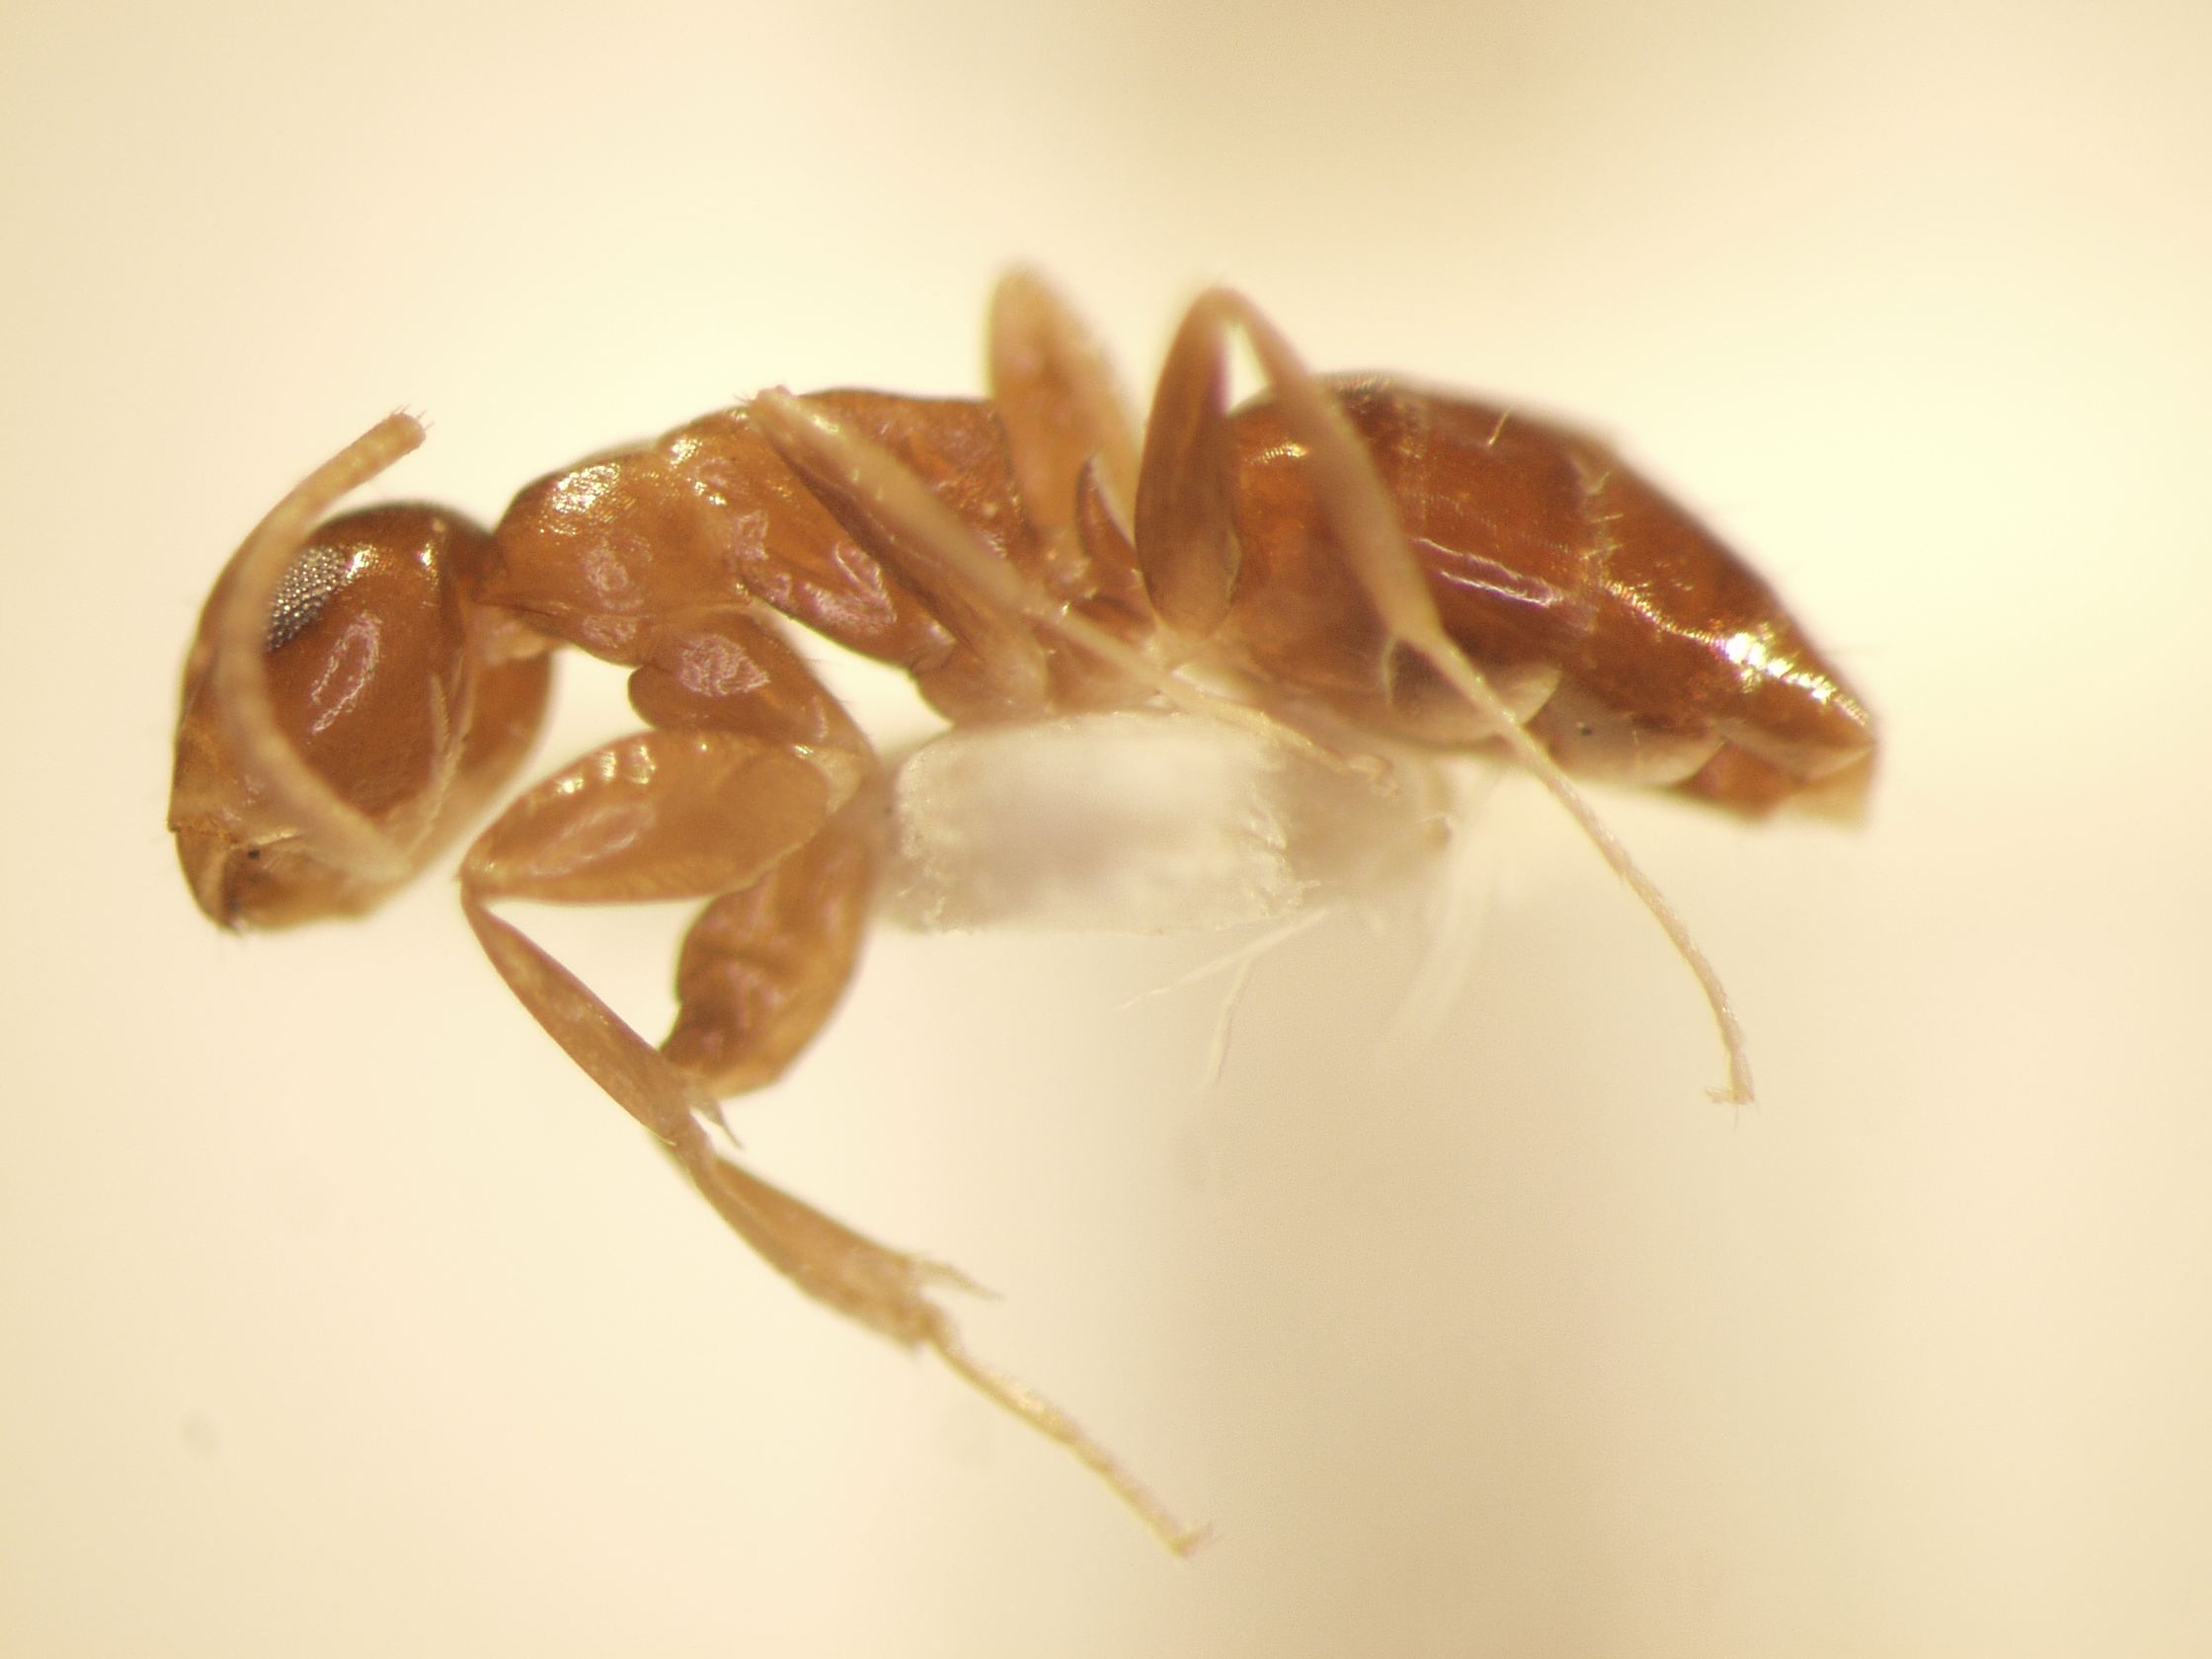 Camponotus 68 lateral